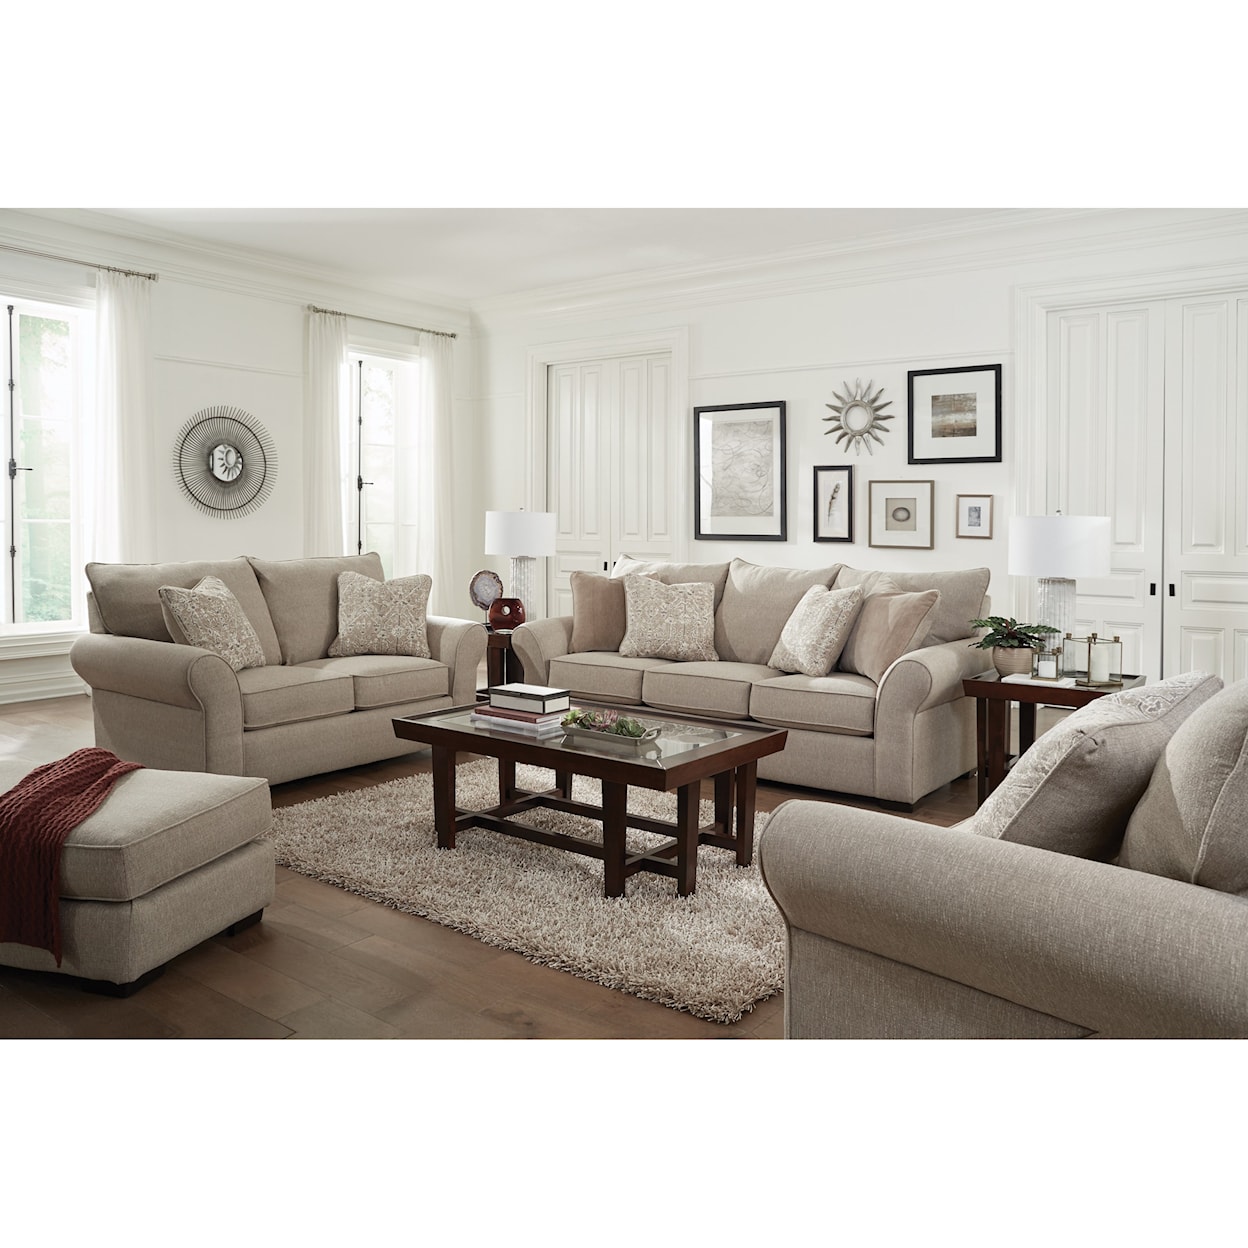 Carolina Furniture 4152 Maddox Ottoman